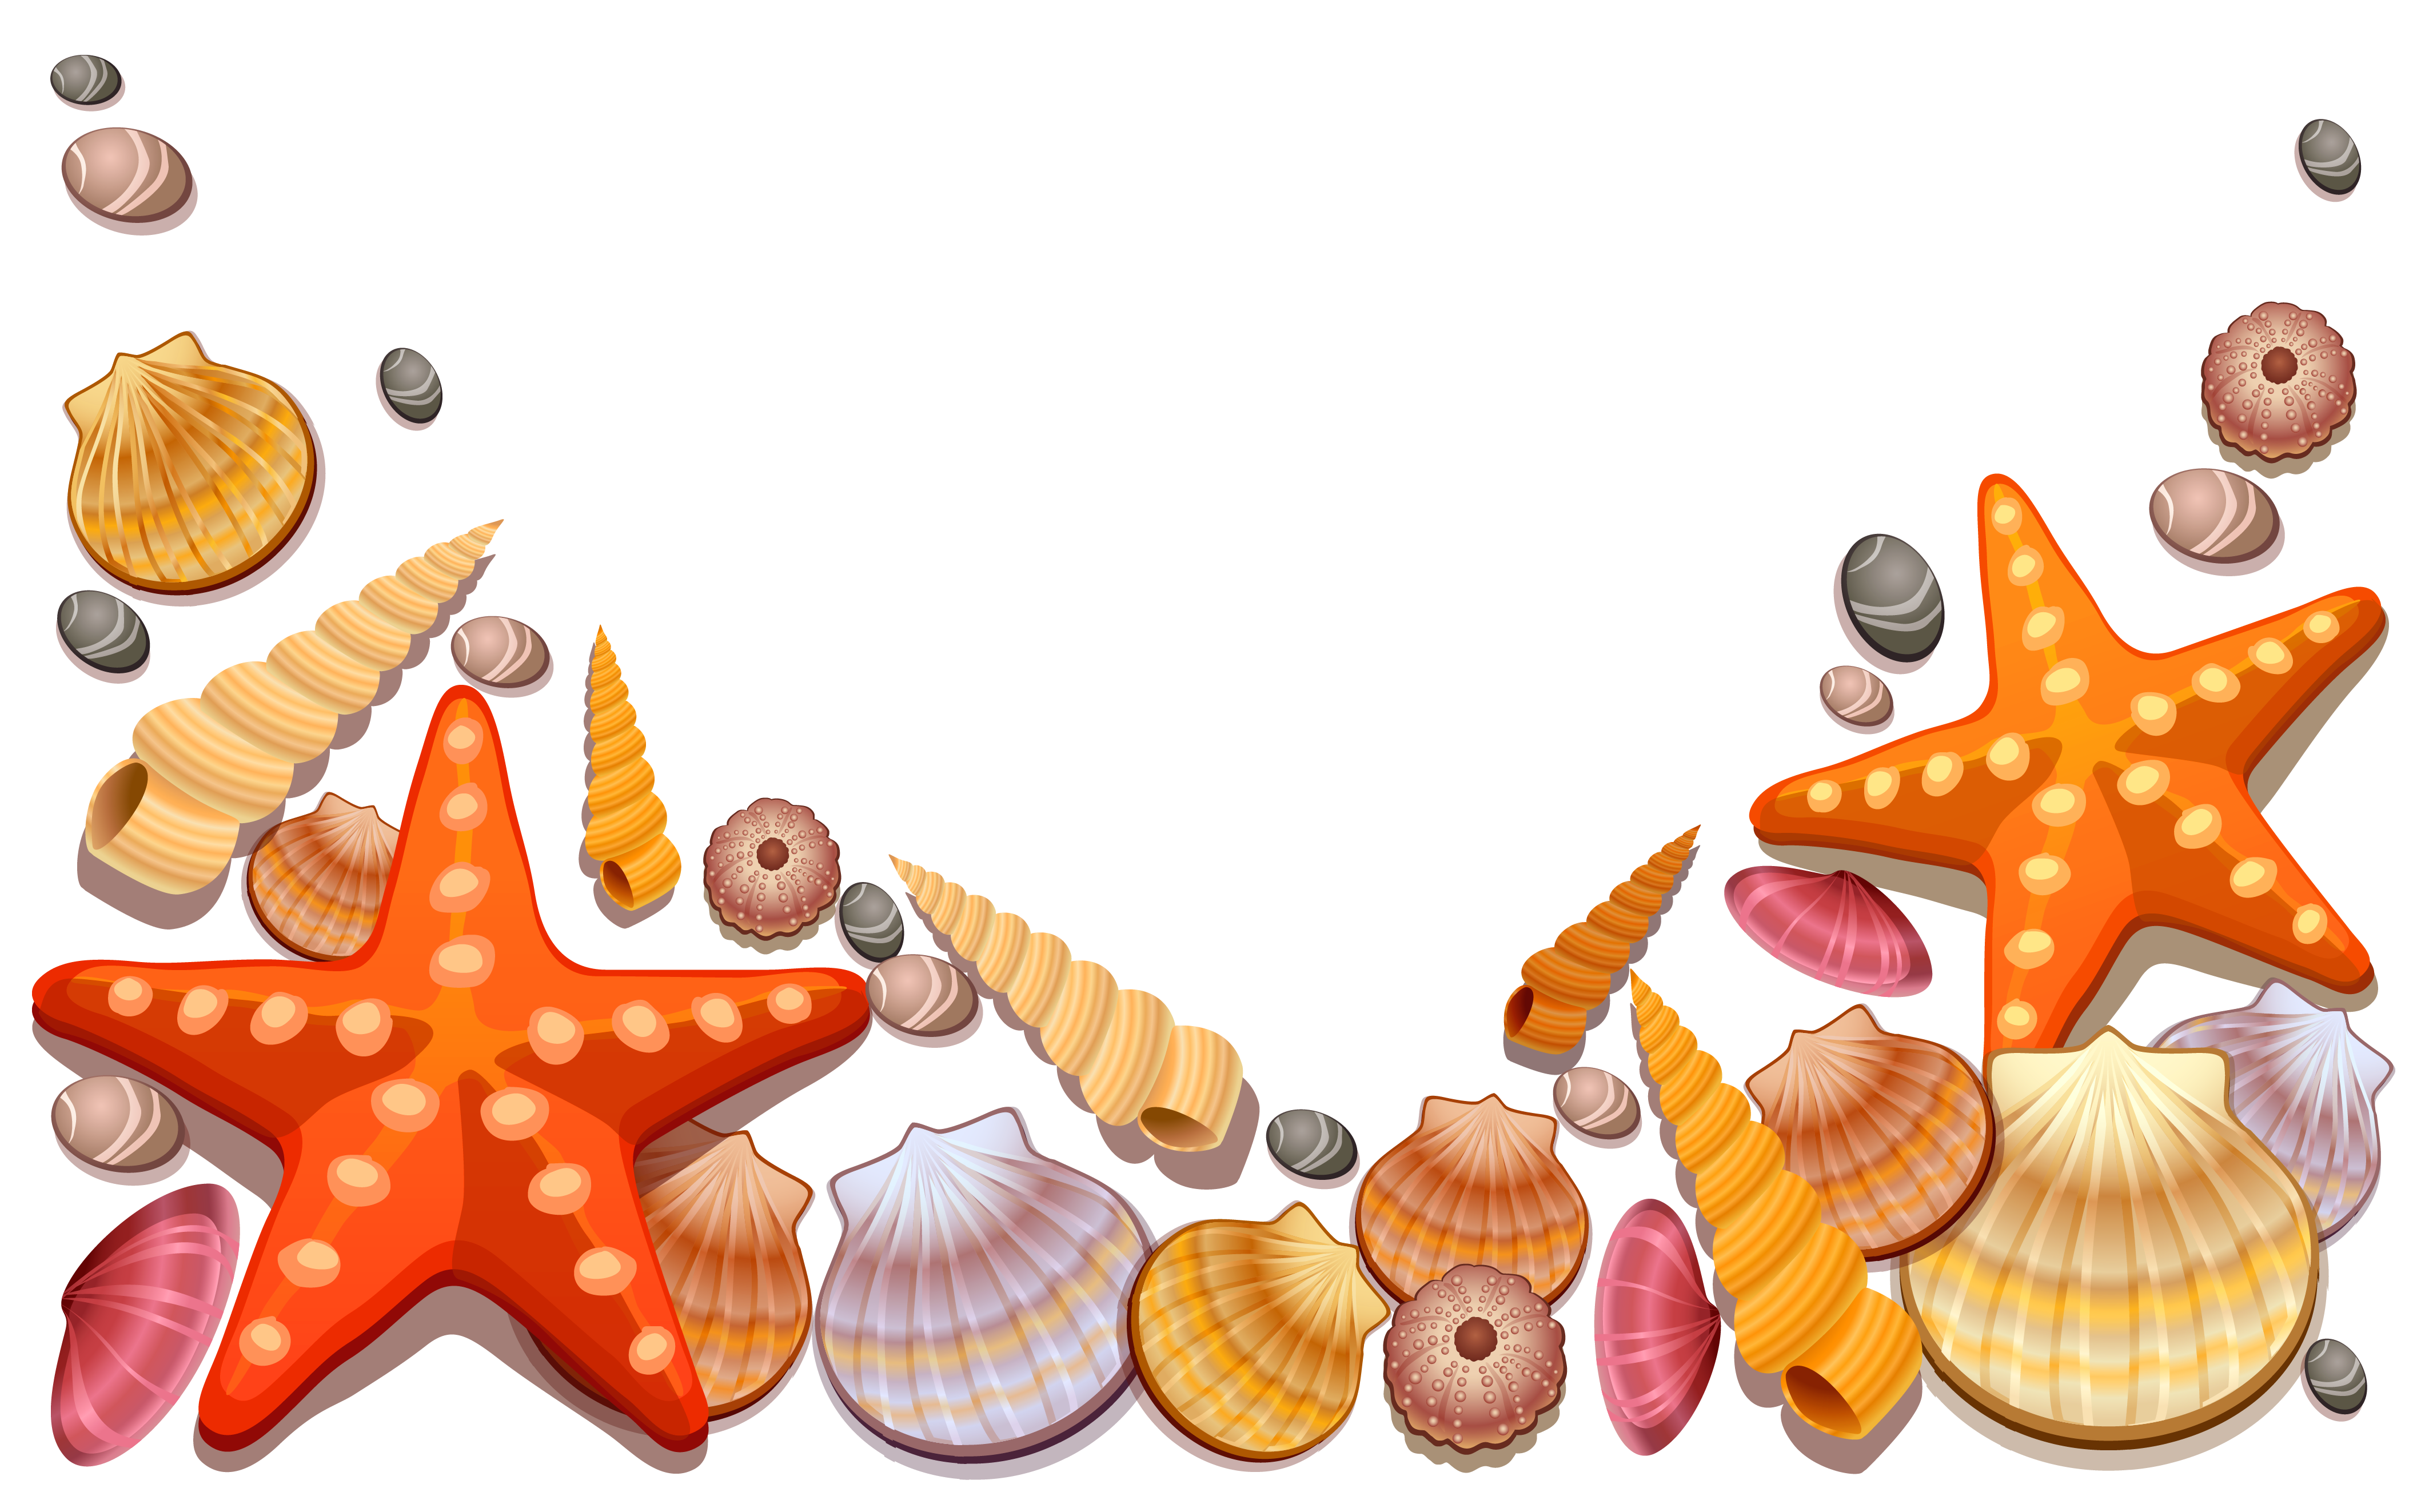 Animated sea shells.